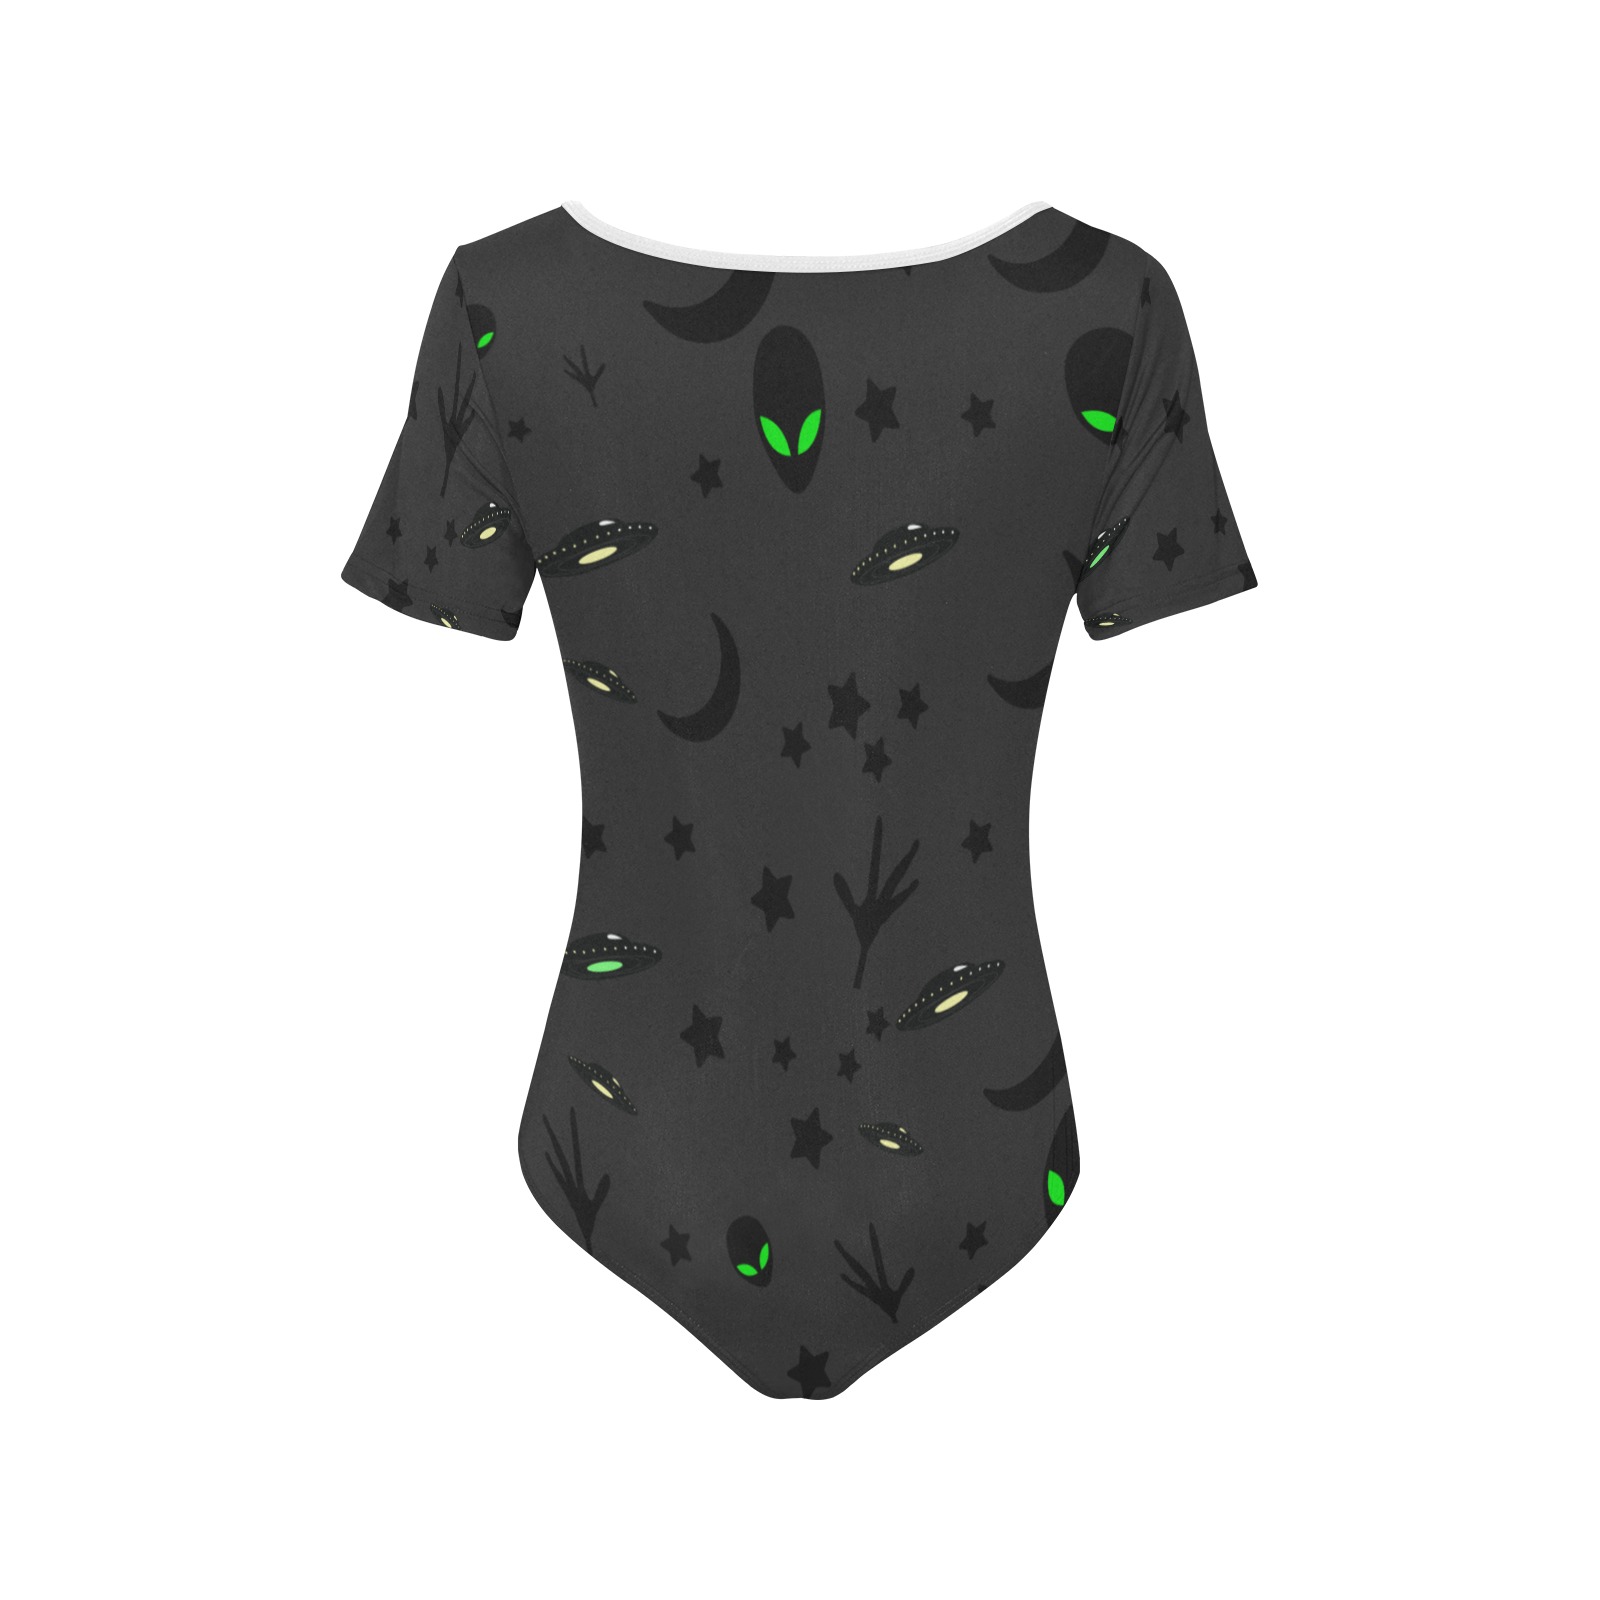 Aliens and Spaceships - Charcoal Women's Short Sleeve Bodysuit